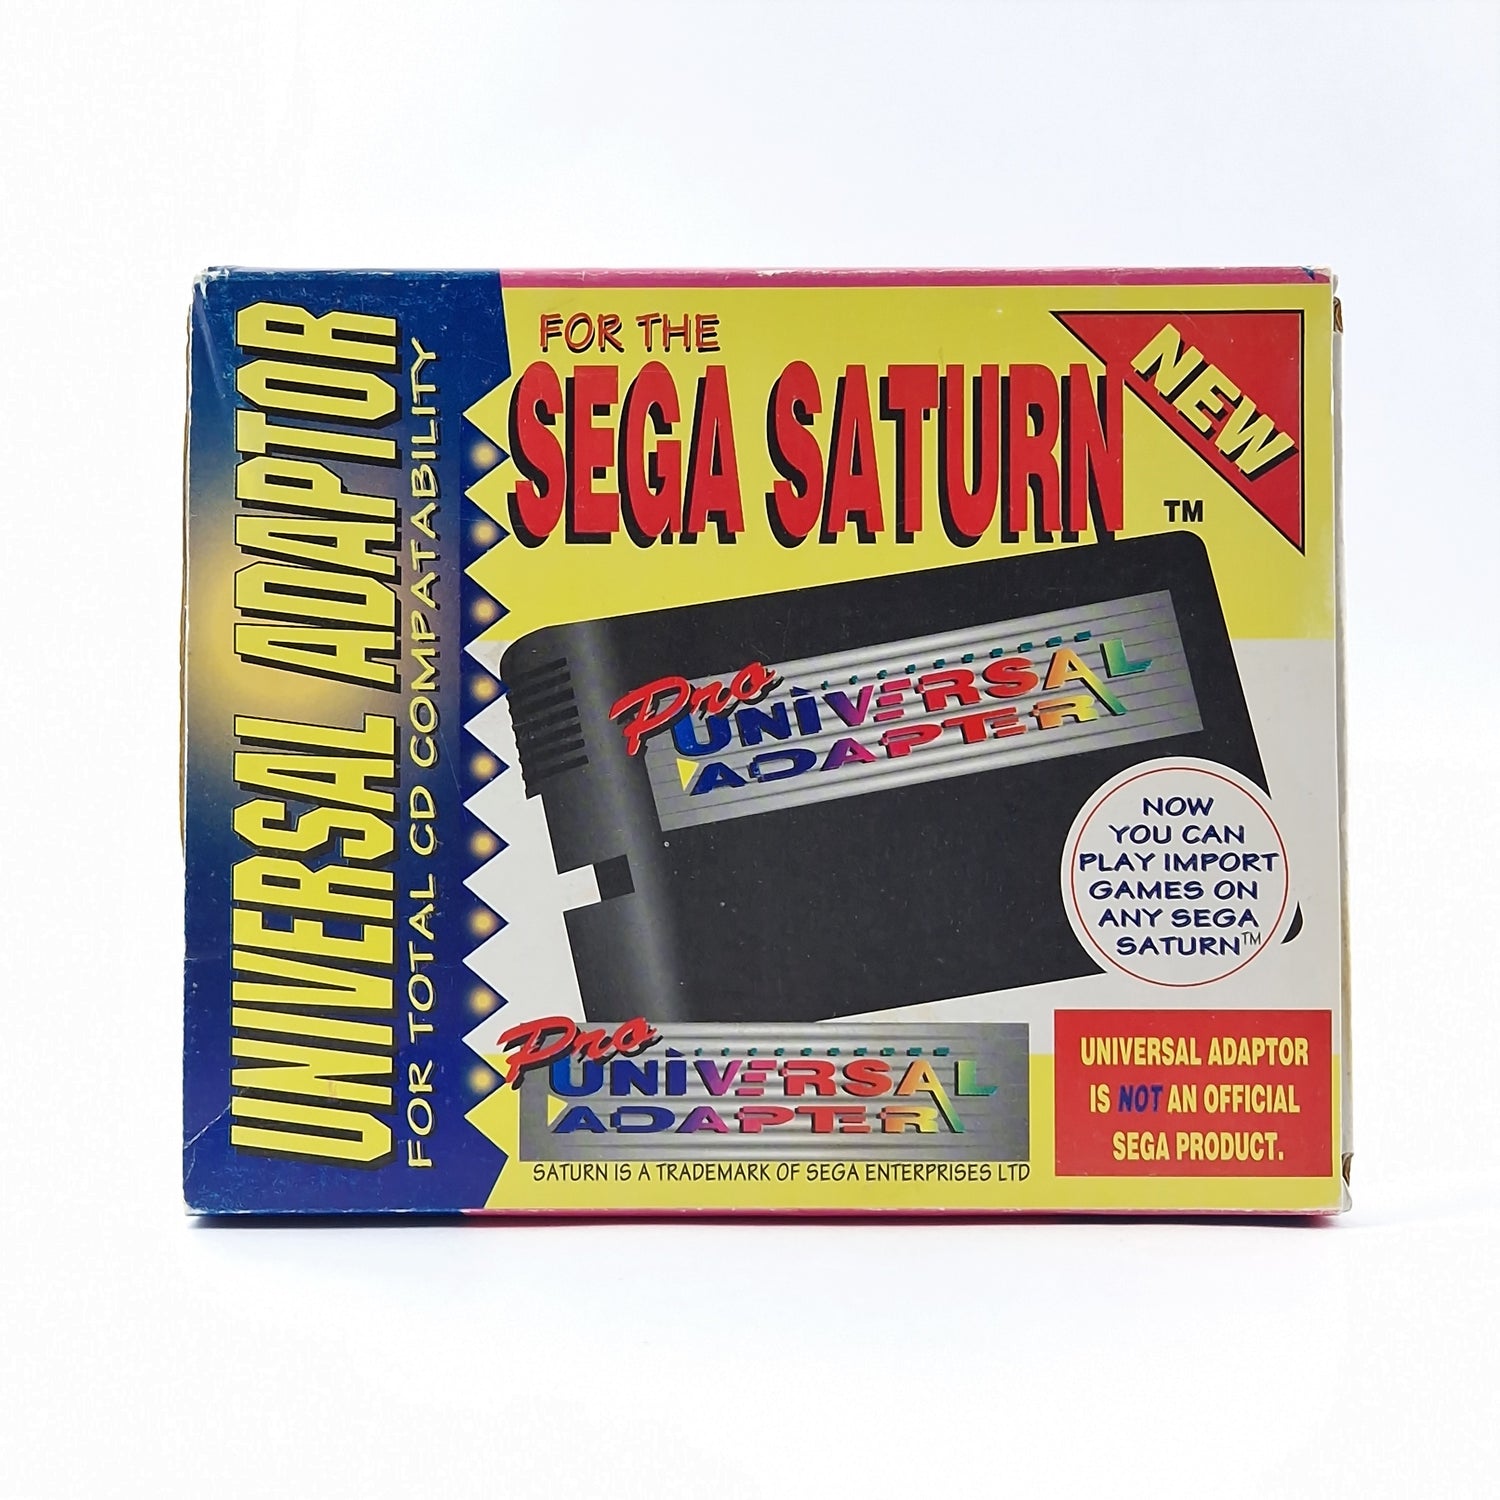 Sega Saturn Accessories Item: Pro Universal Adapter - Play Import Games OVP PAL